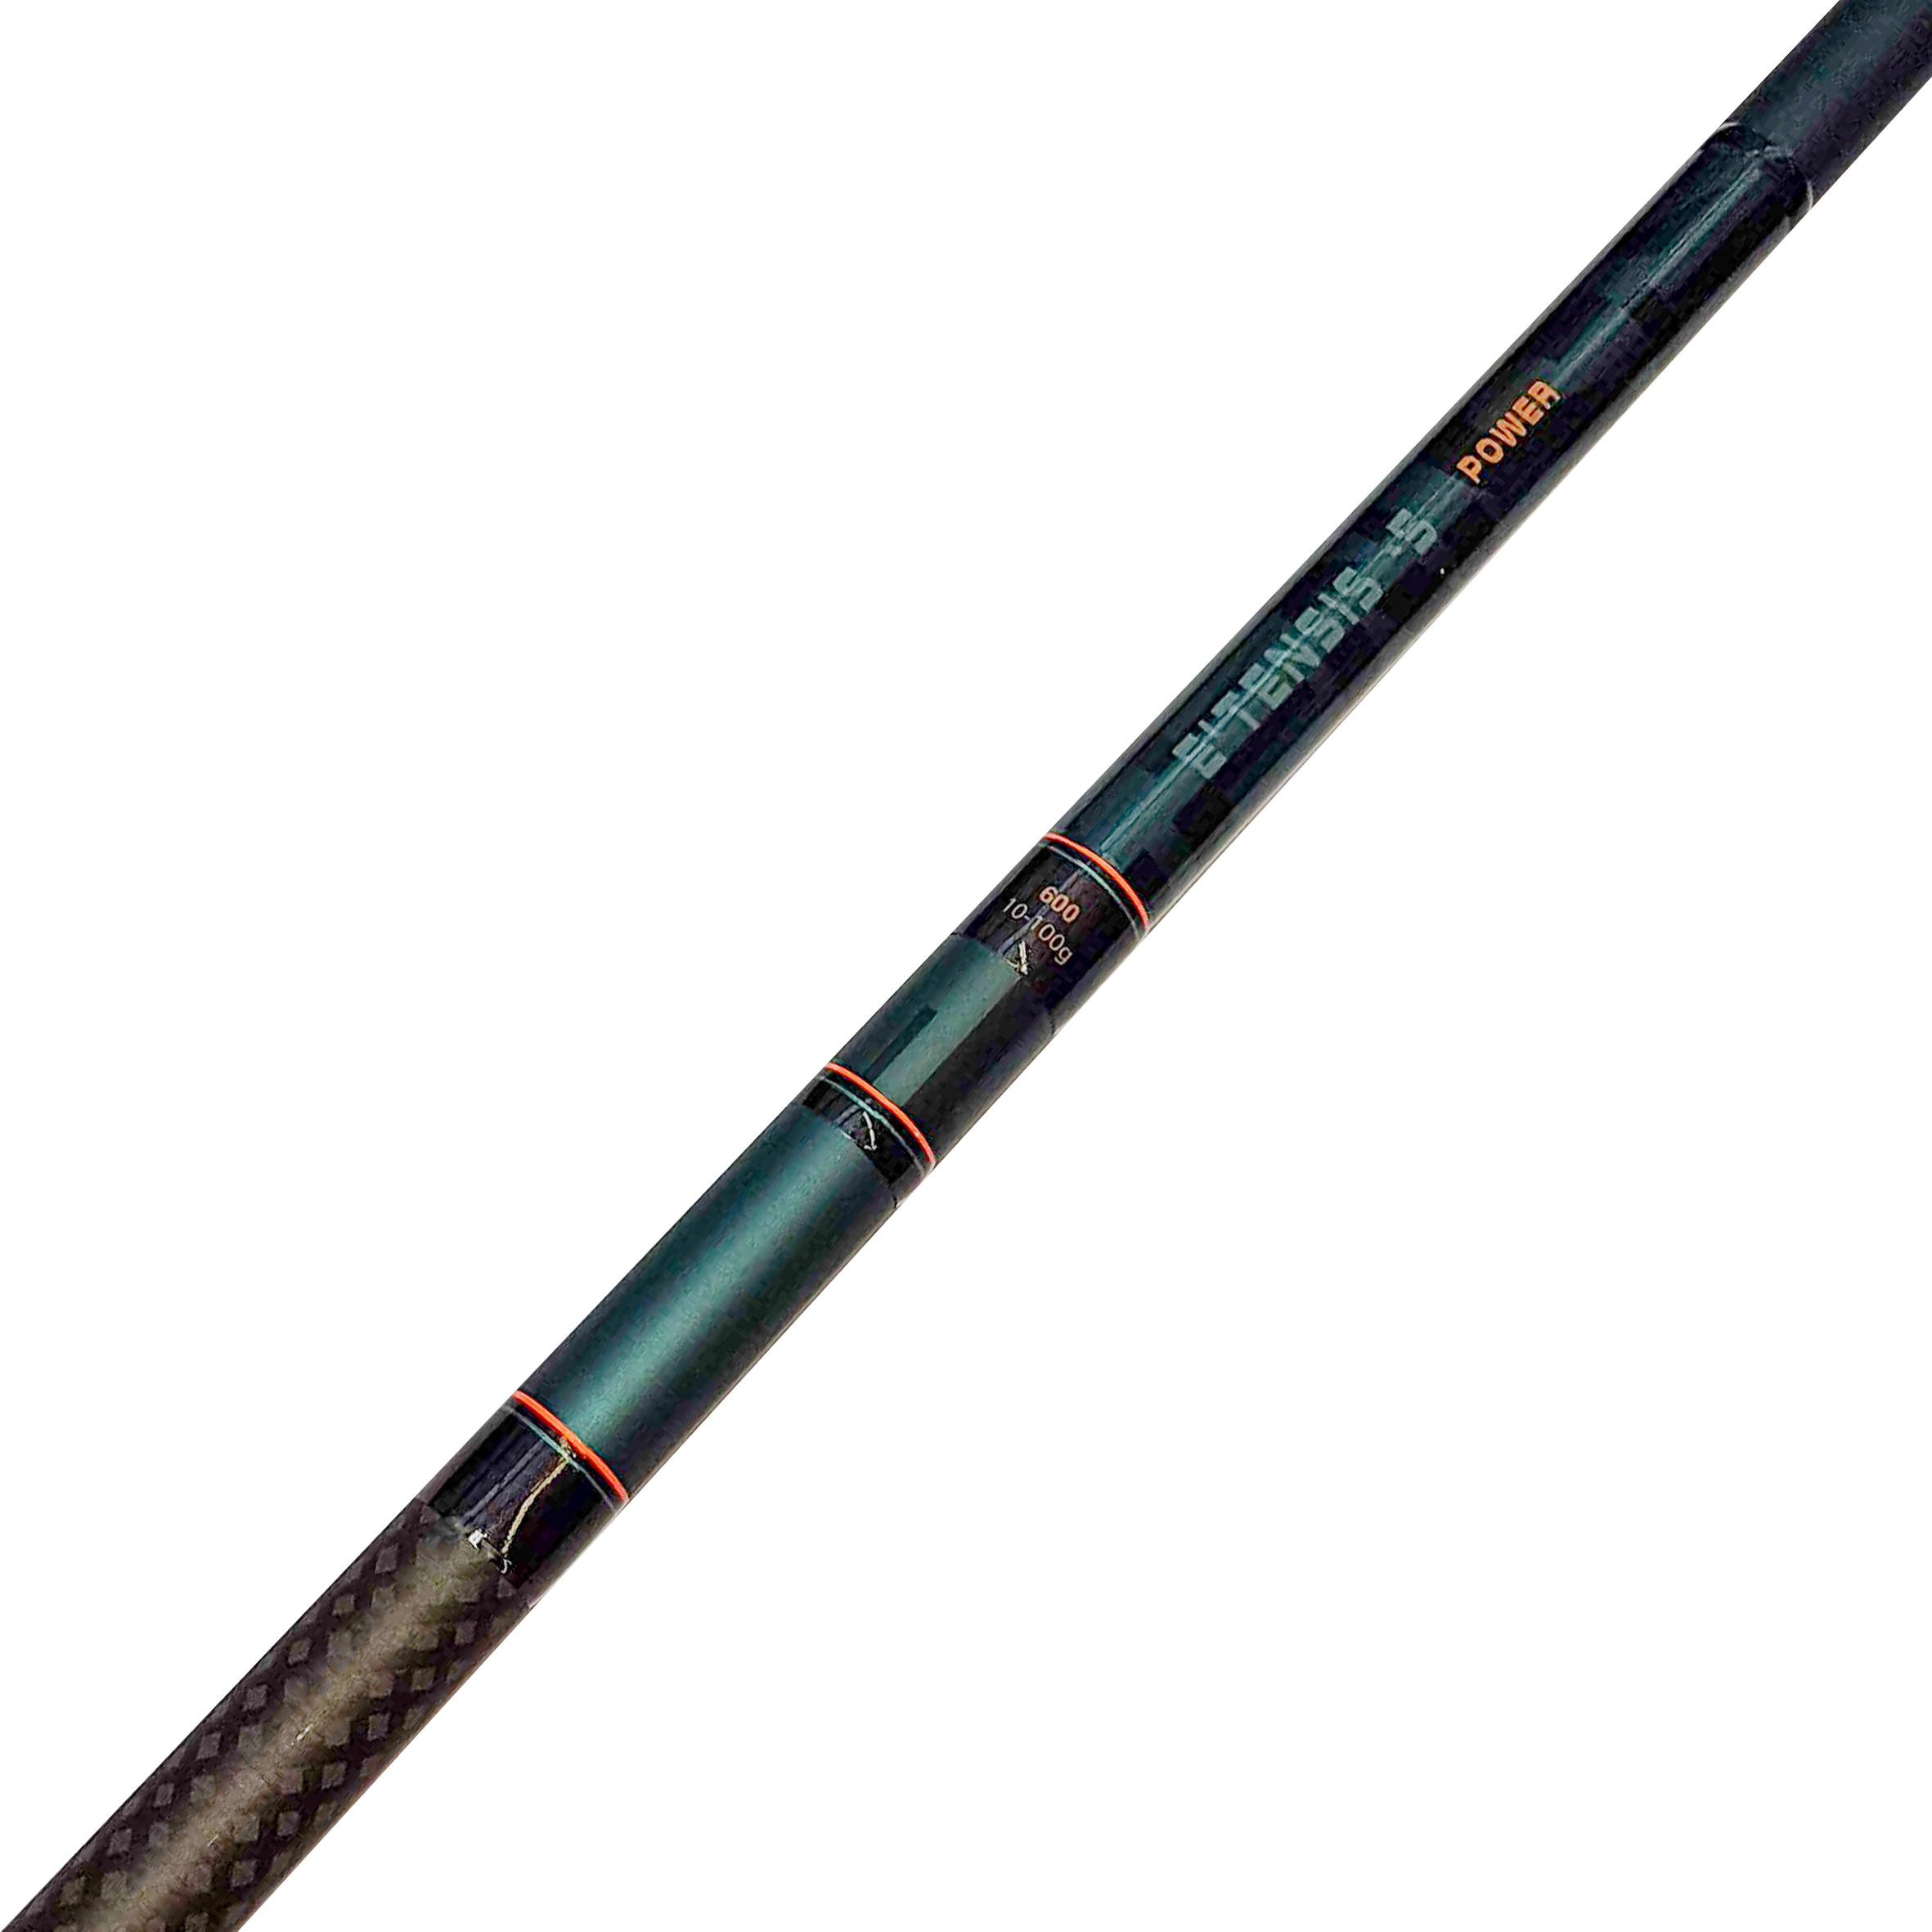 E'TENSIS-5 600 power sea fishing rod 2/9